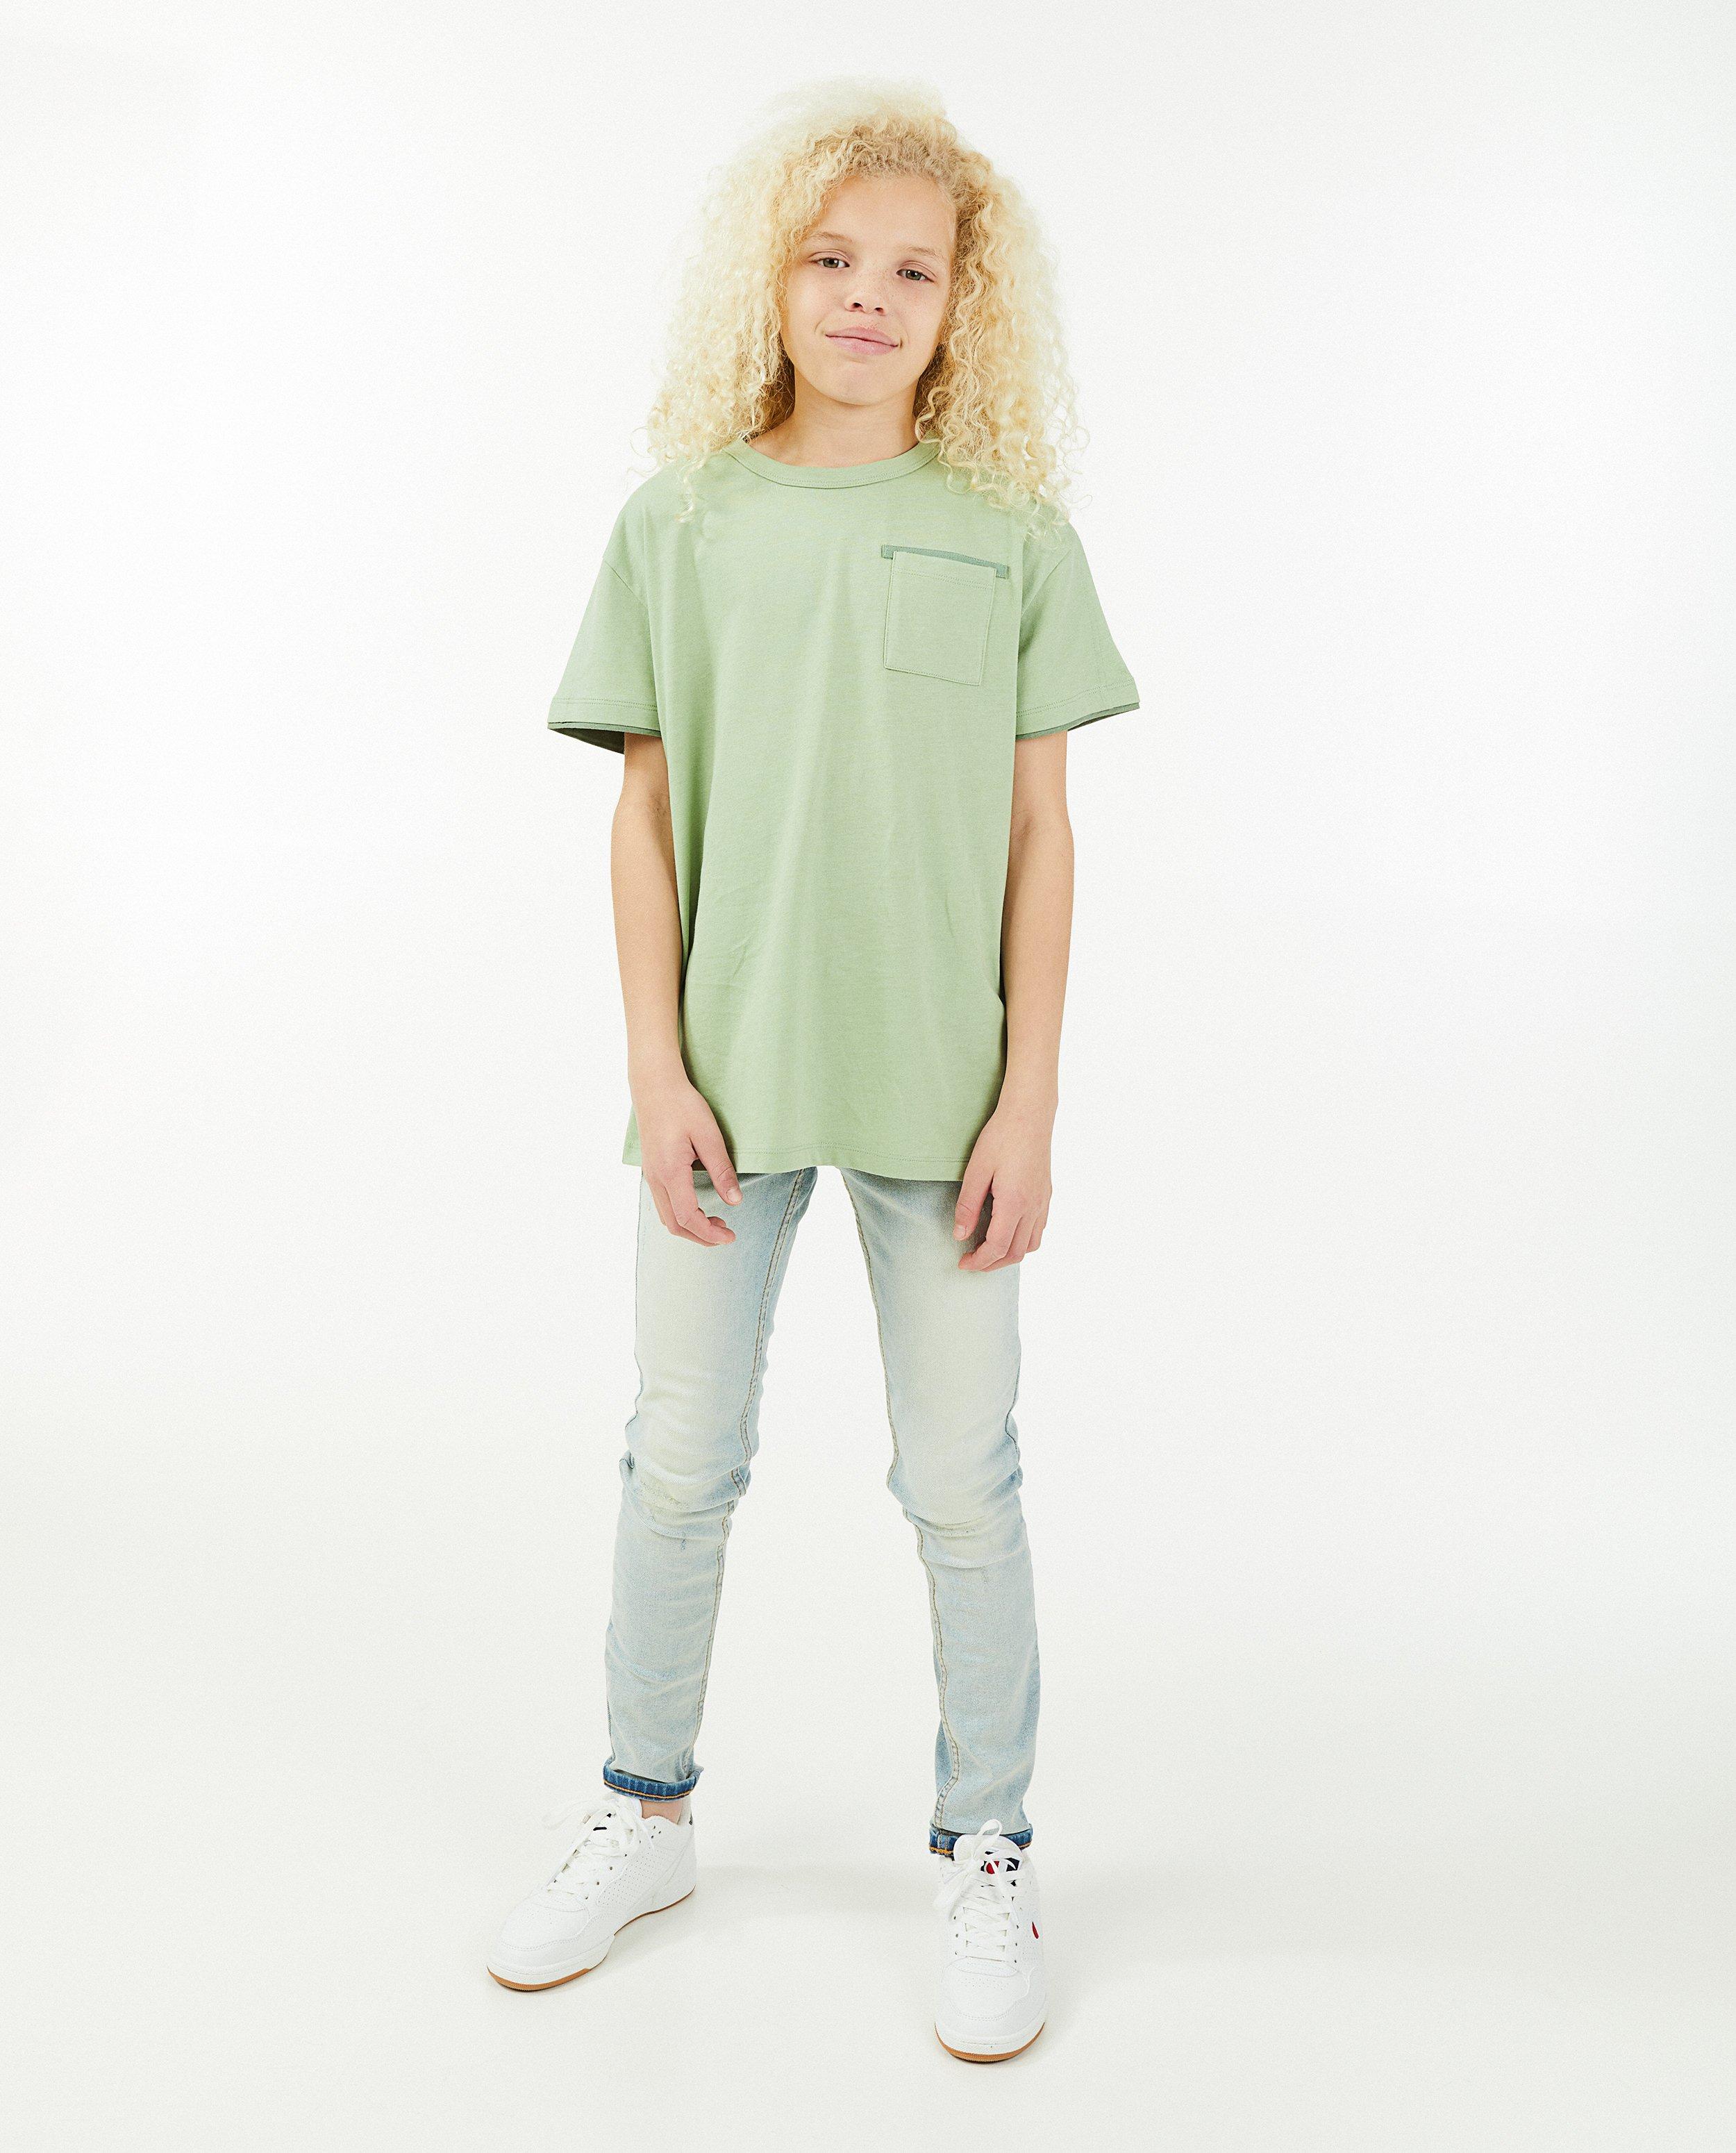 T-shirts - Groen T-shirt #LikeMe